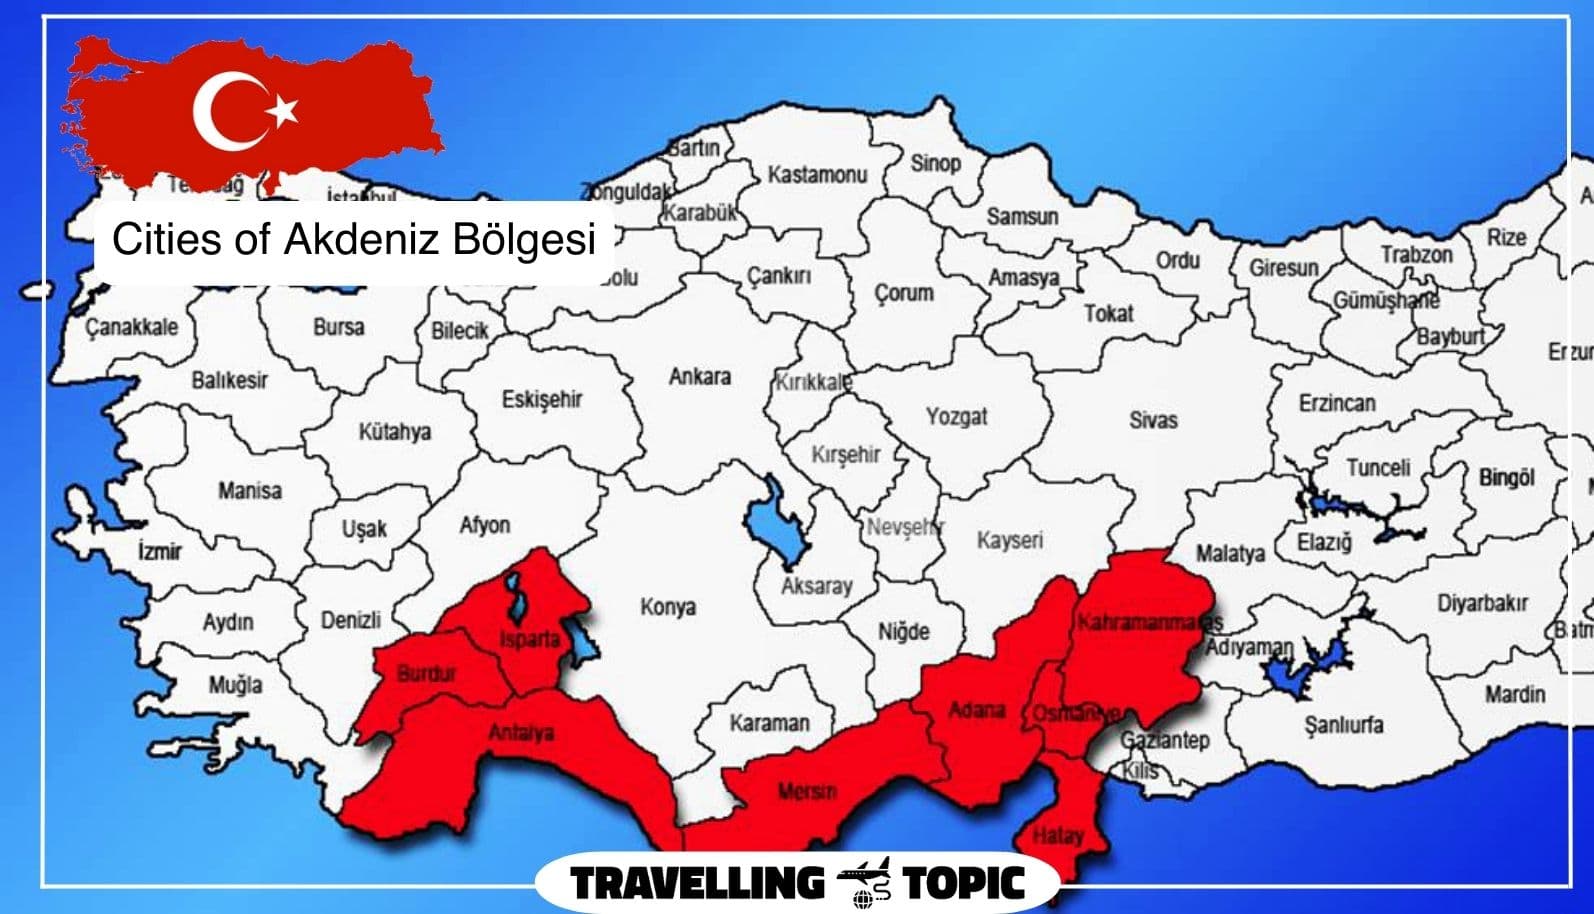 Cities of Akdeniz Bölgesi